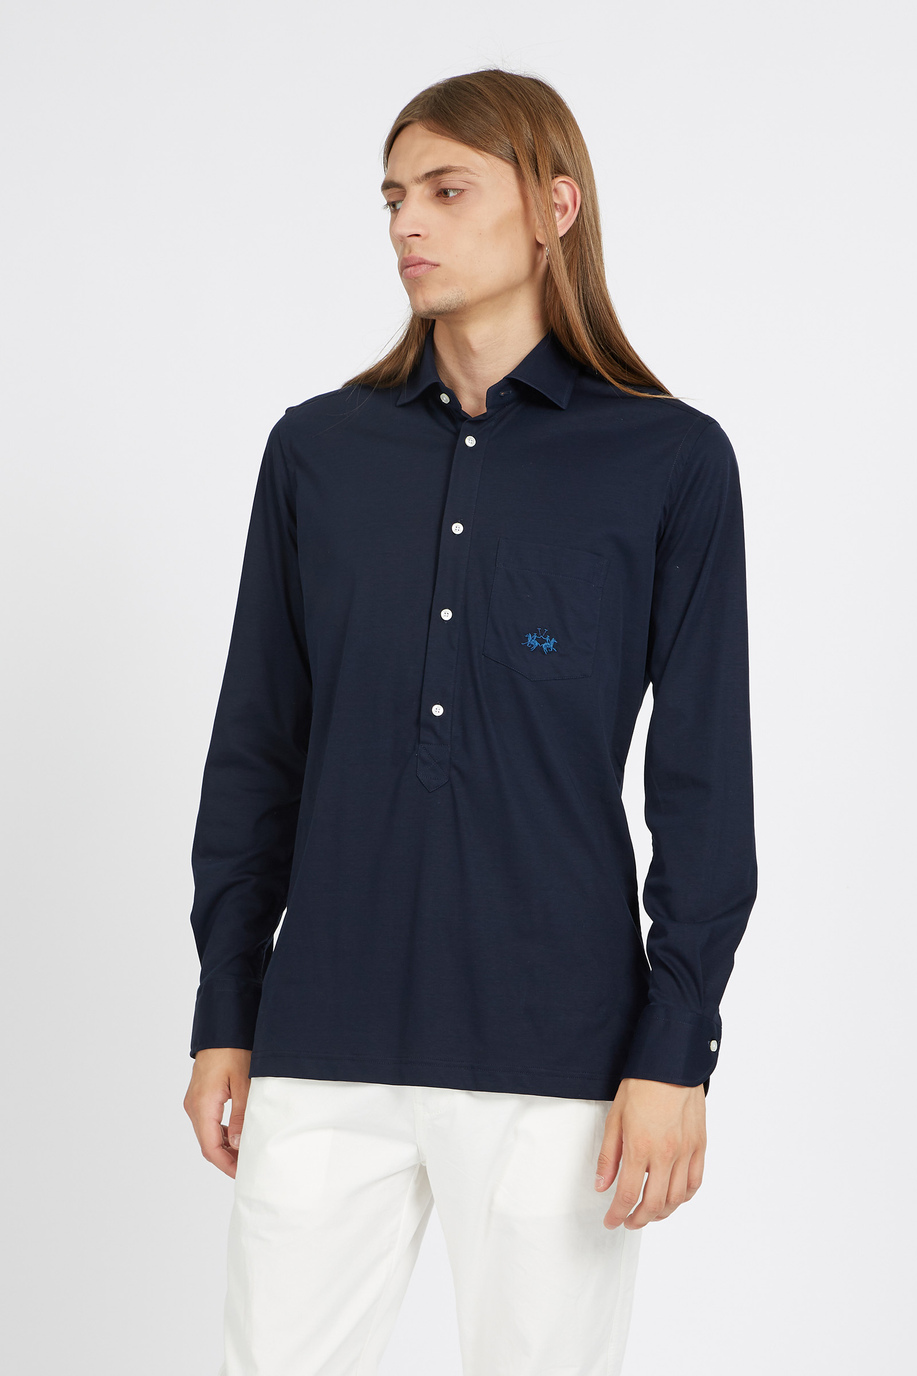 Camicia uomo in cotone jersey maniche lunghe custom fit - Varden - Manica lunga | La Martina - Official Online Shop